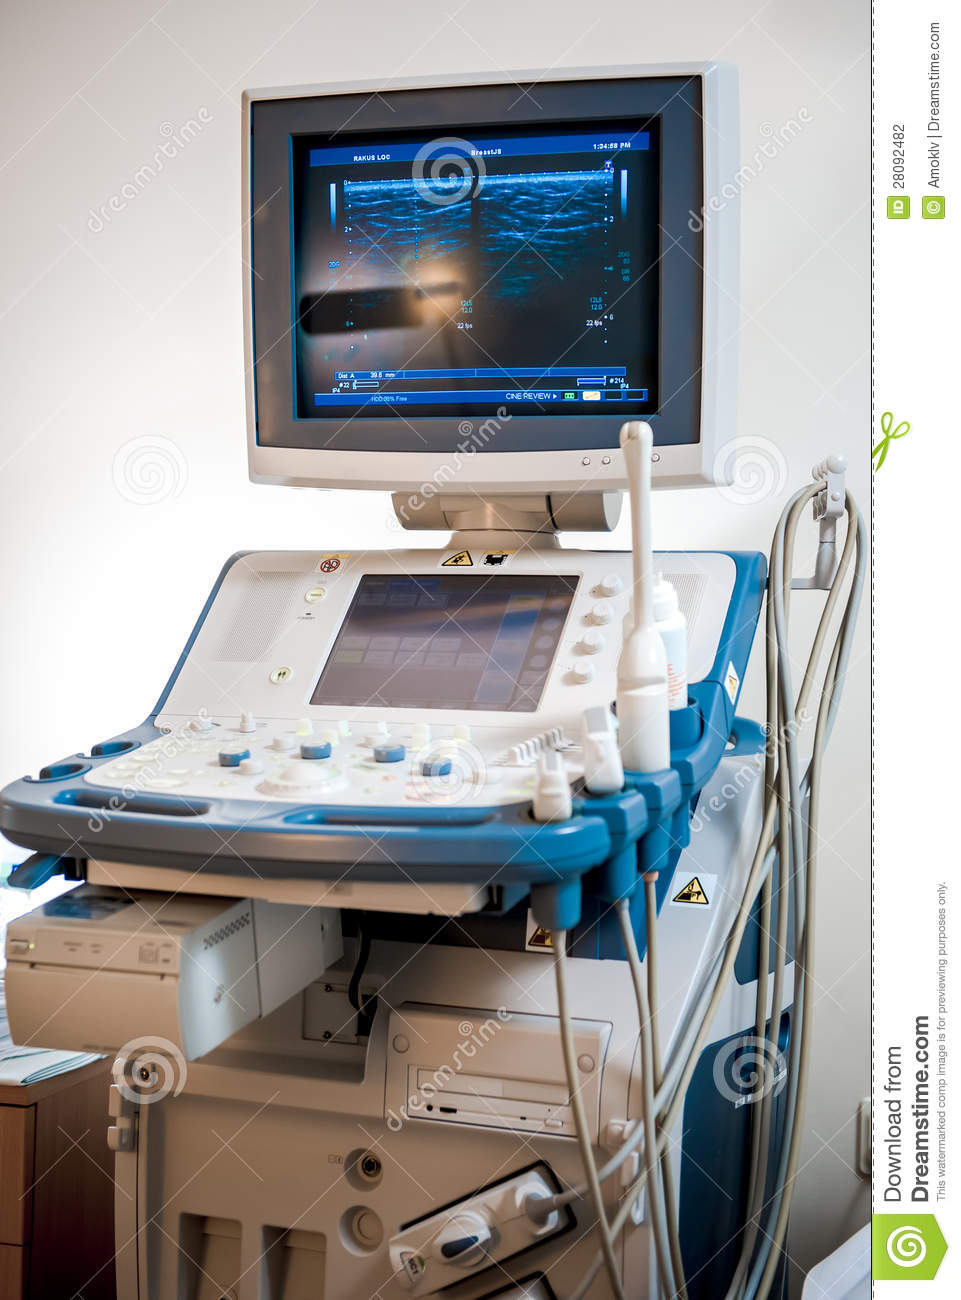 Diploma in Medical Ultrasonography